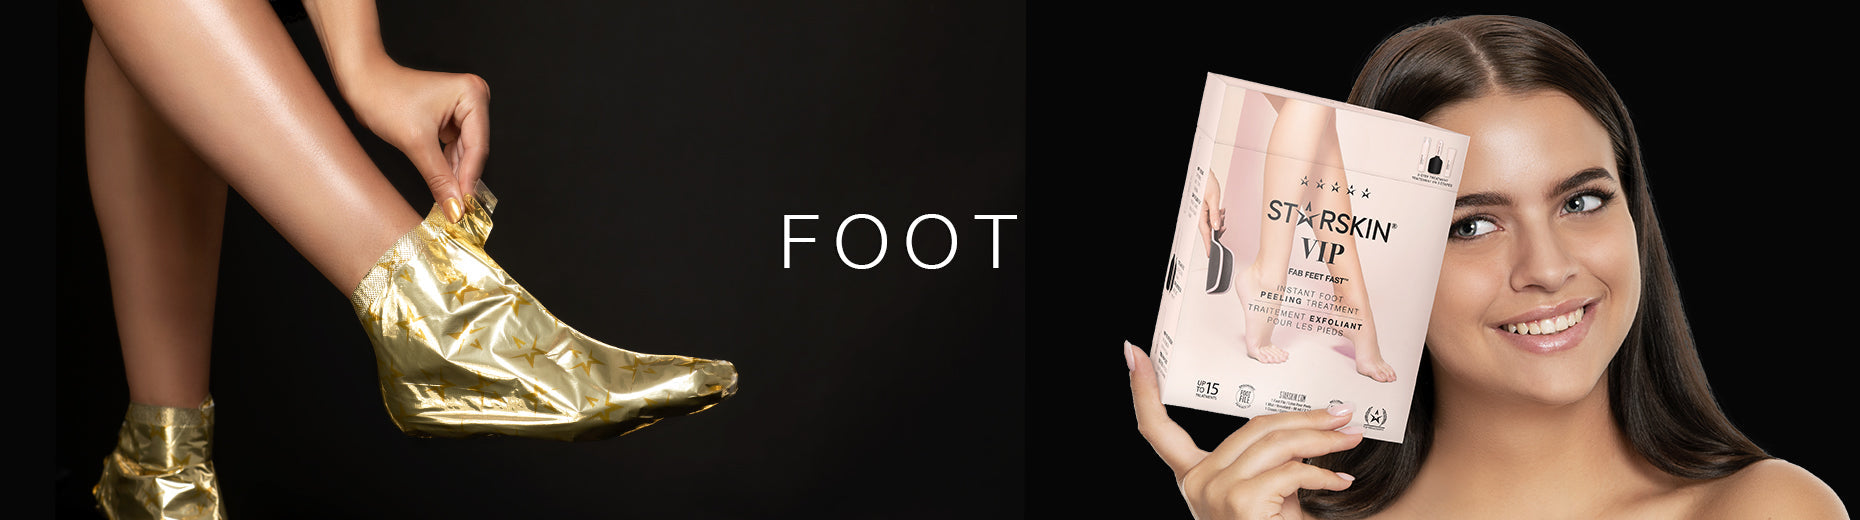 banner foot showing starskin vip gold foot sok and starskin vip fab feet fast set